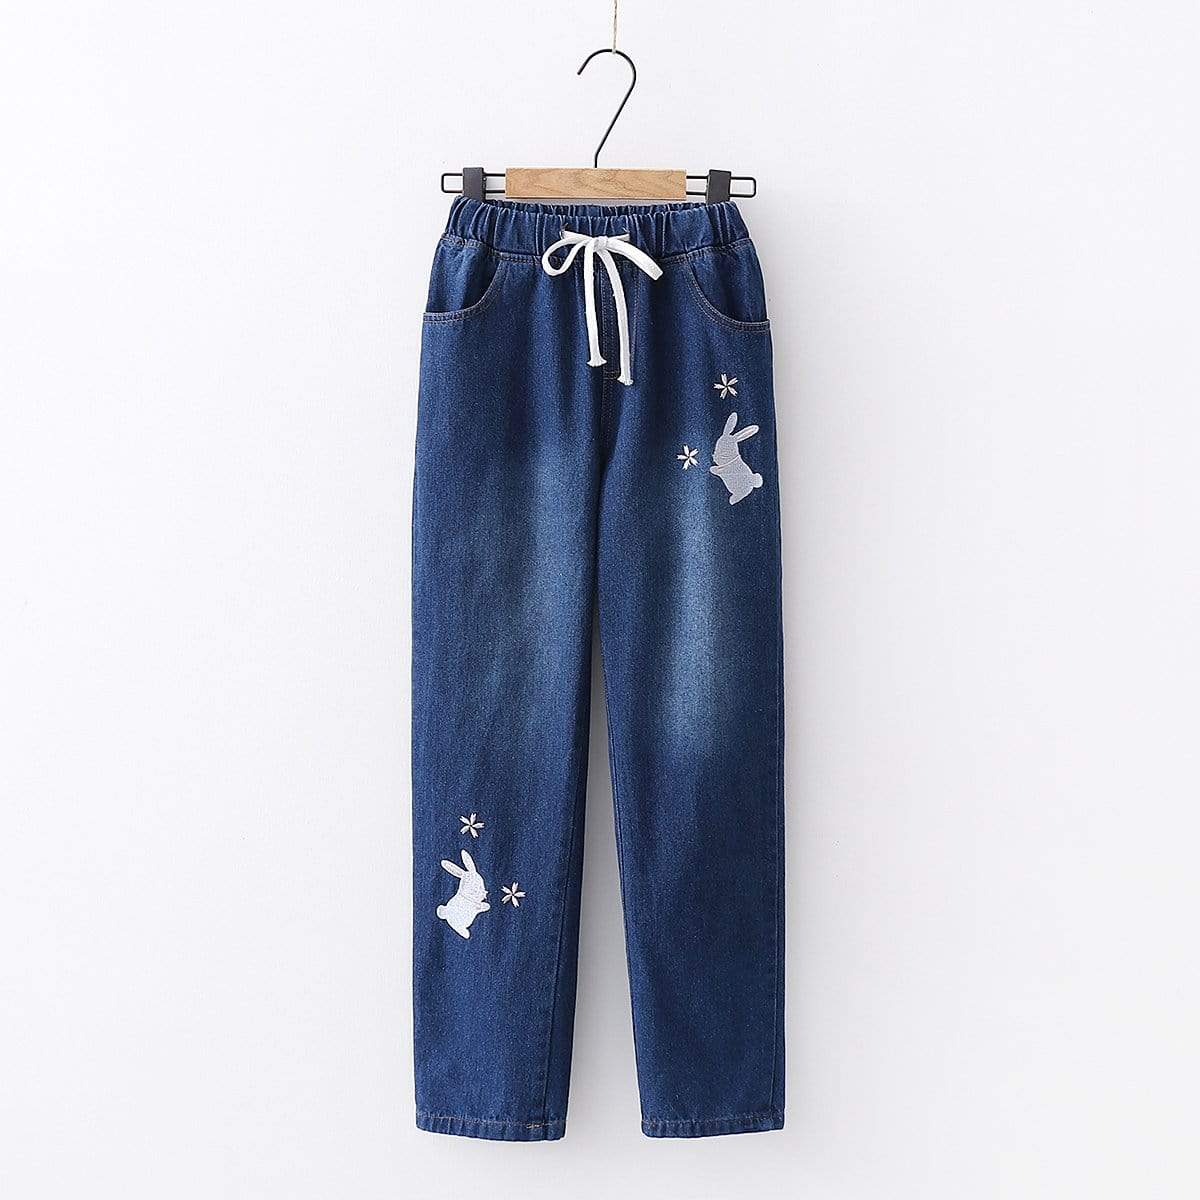 Kawaiifashion Women's Casual Rabbit Embroidered Elastic Straight Jeans 